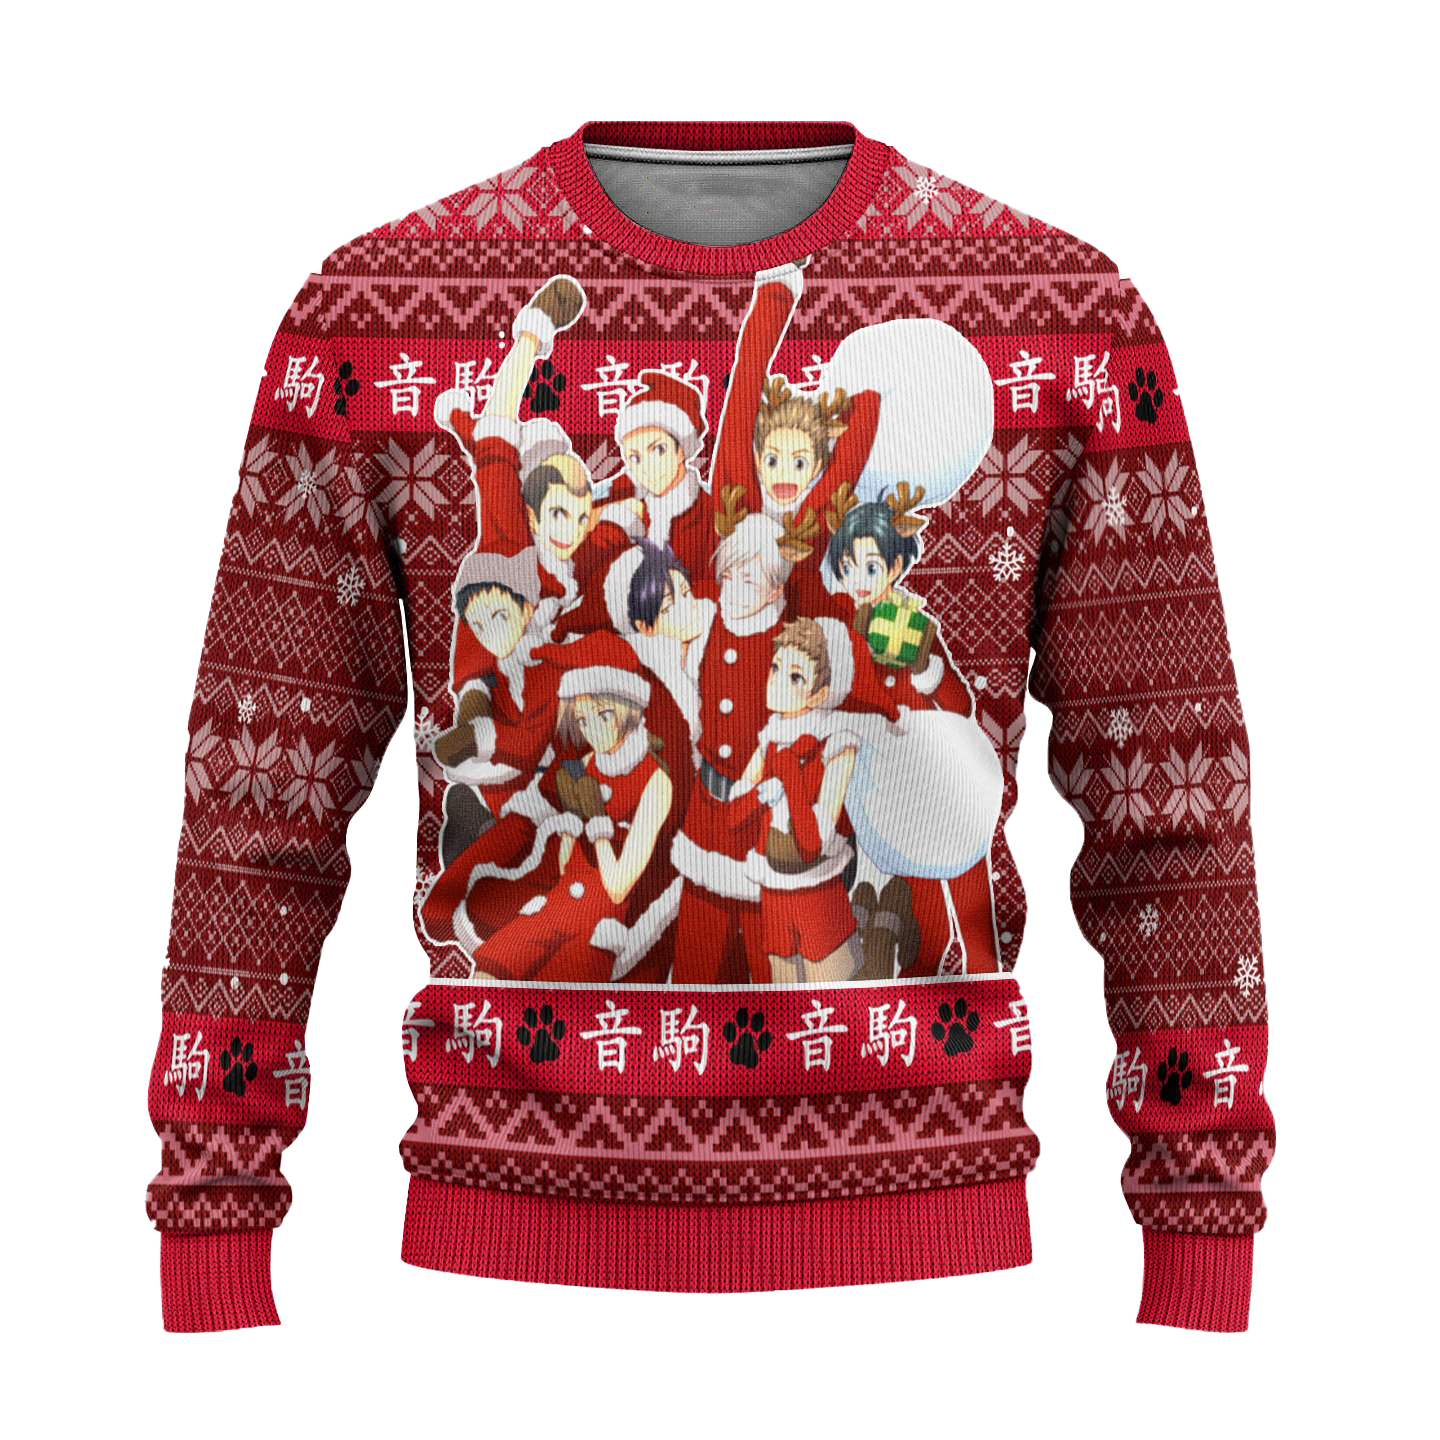 Nekoma High Ugly Christmas Sweater Haikyuu Anime Xmas Gift